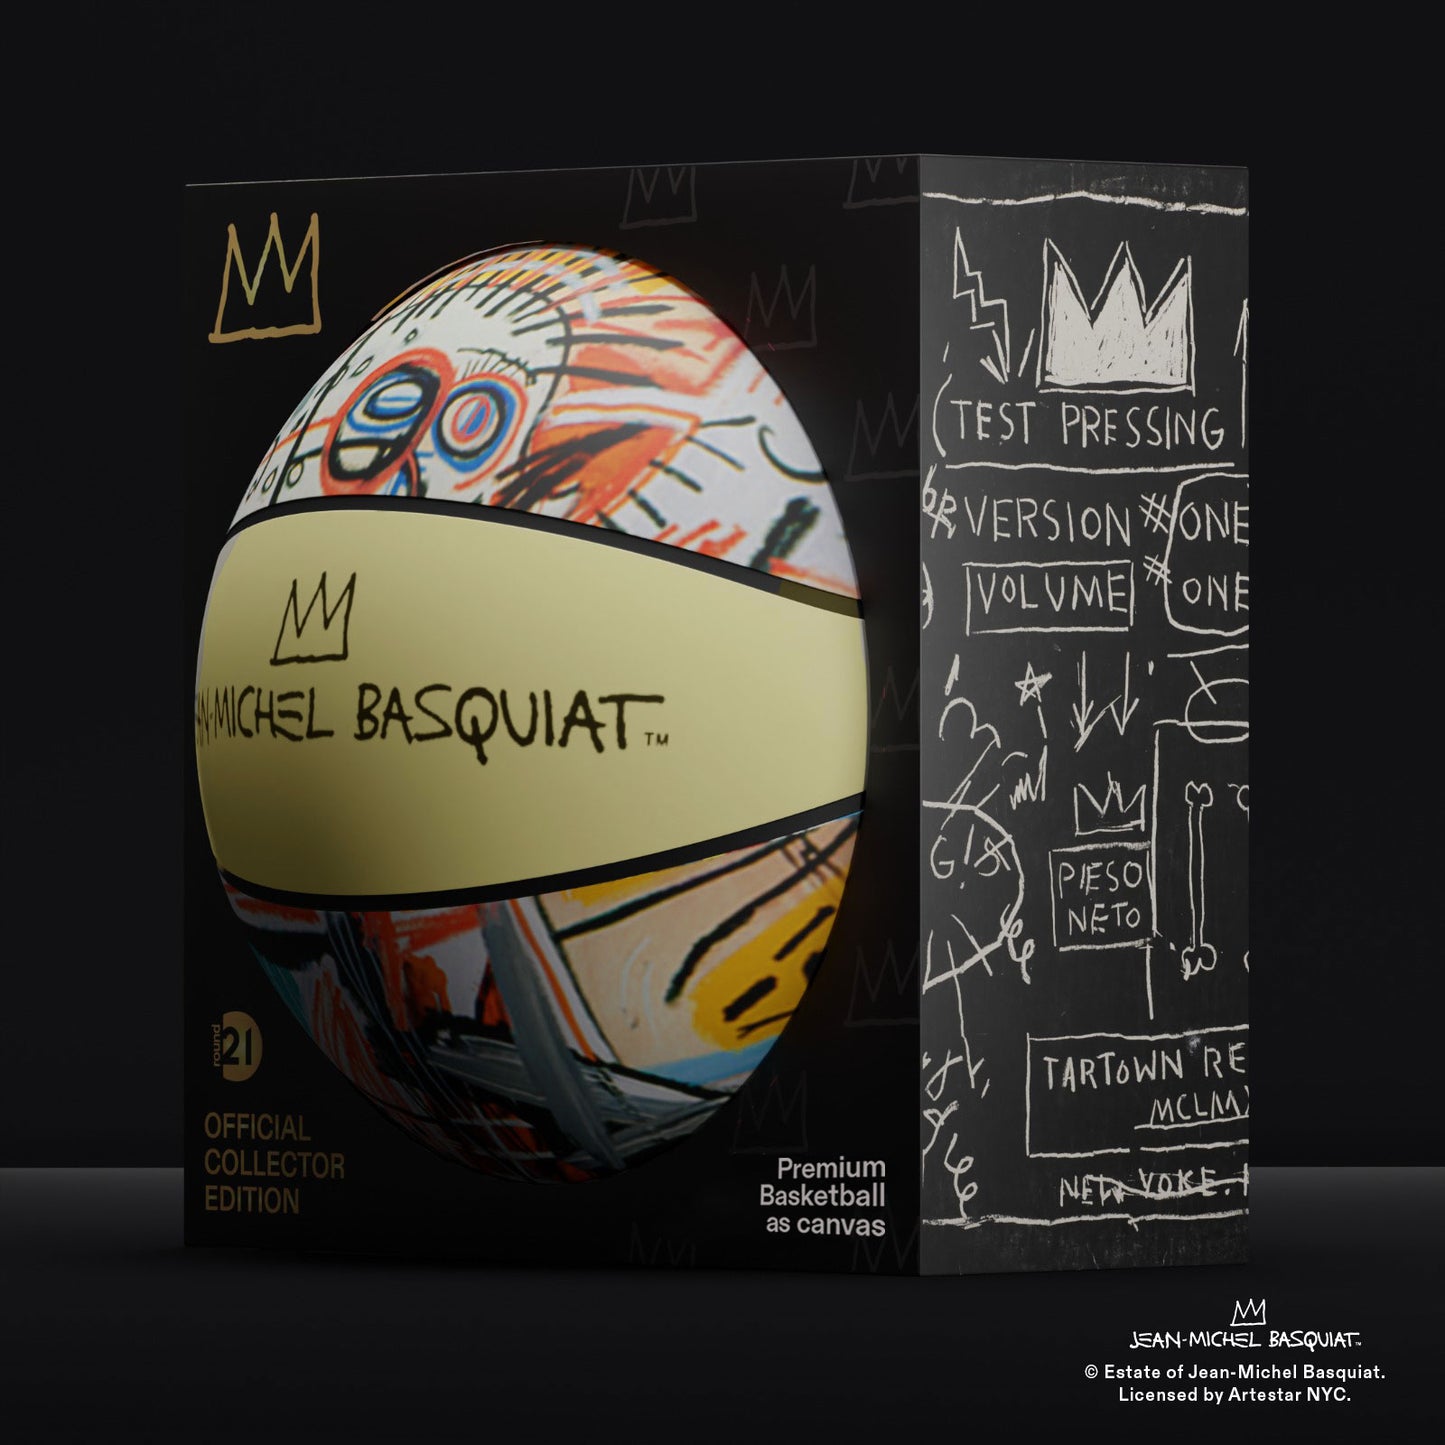 Jean-Micheal Basquiat  "Phillisteins" Basketball